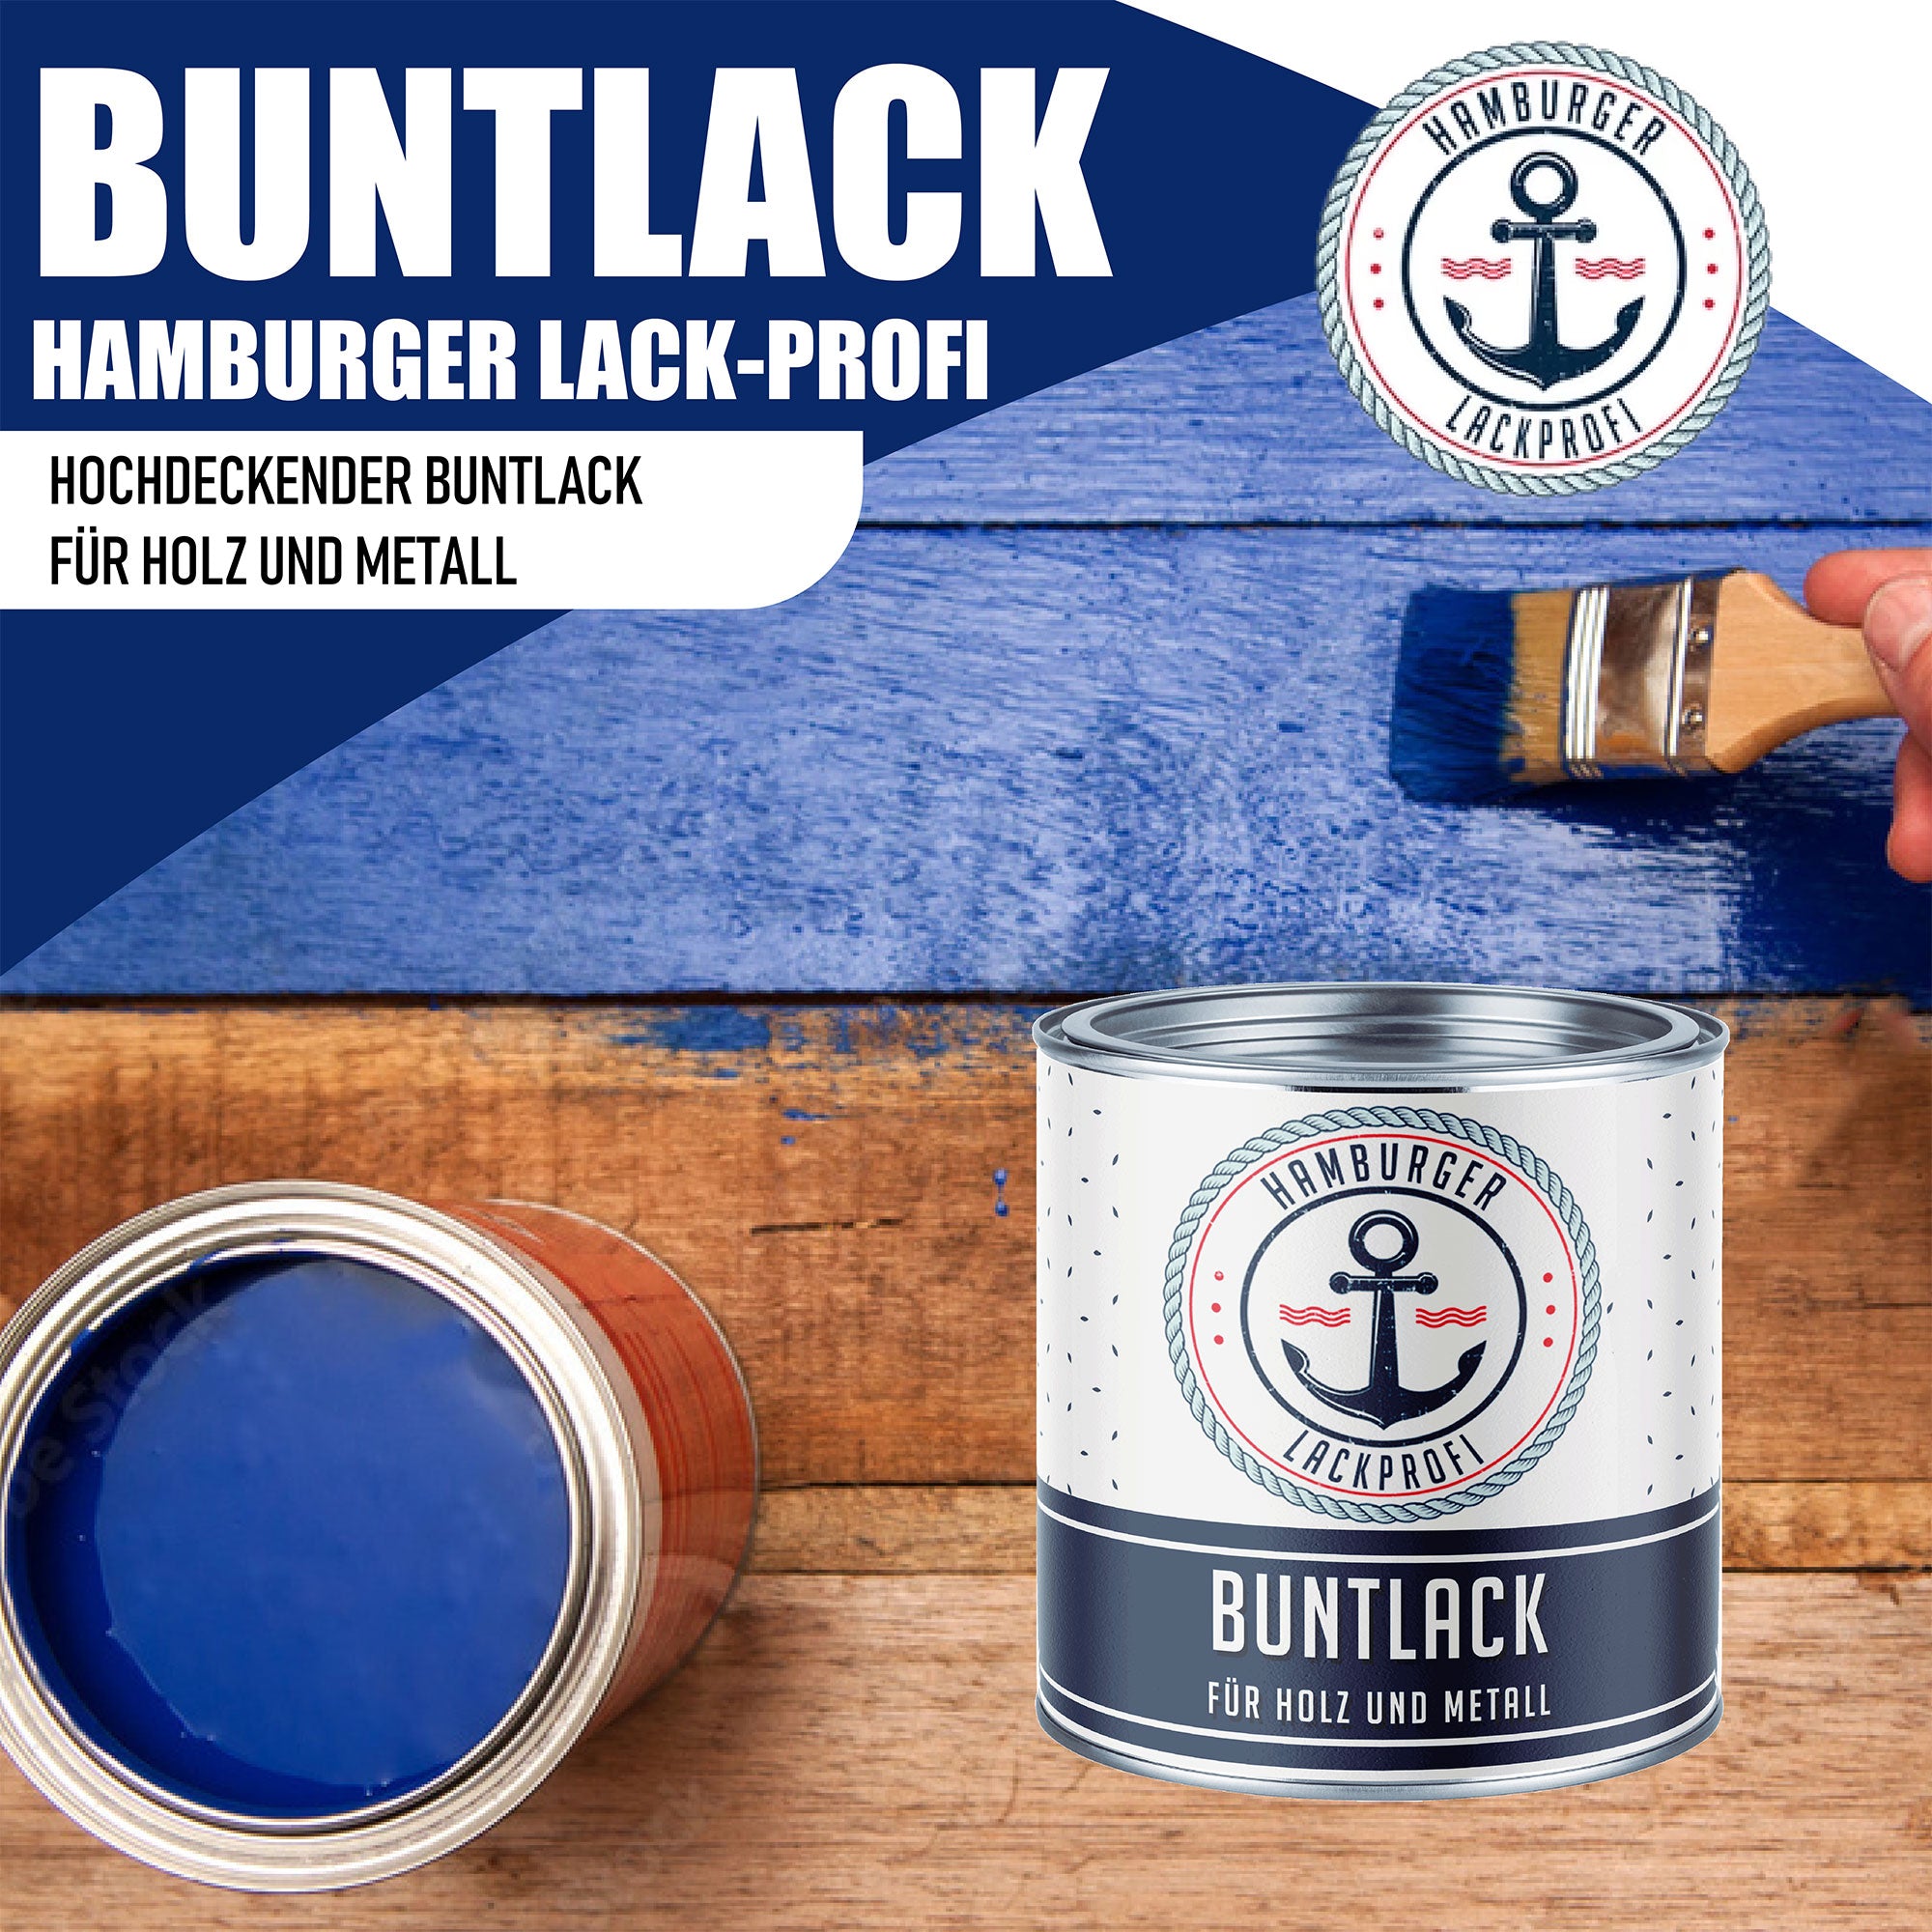 Hamburger Lack-Profi Buntlack Lehmbraun RAL 8003 - Robuster Kunstharzlack